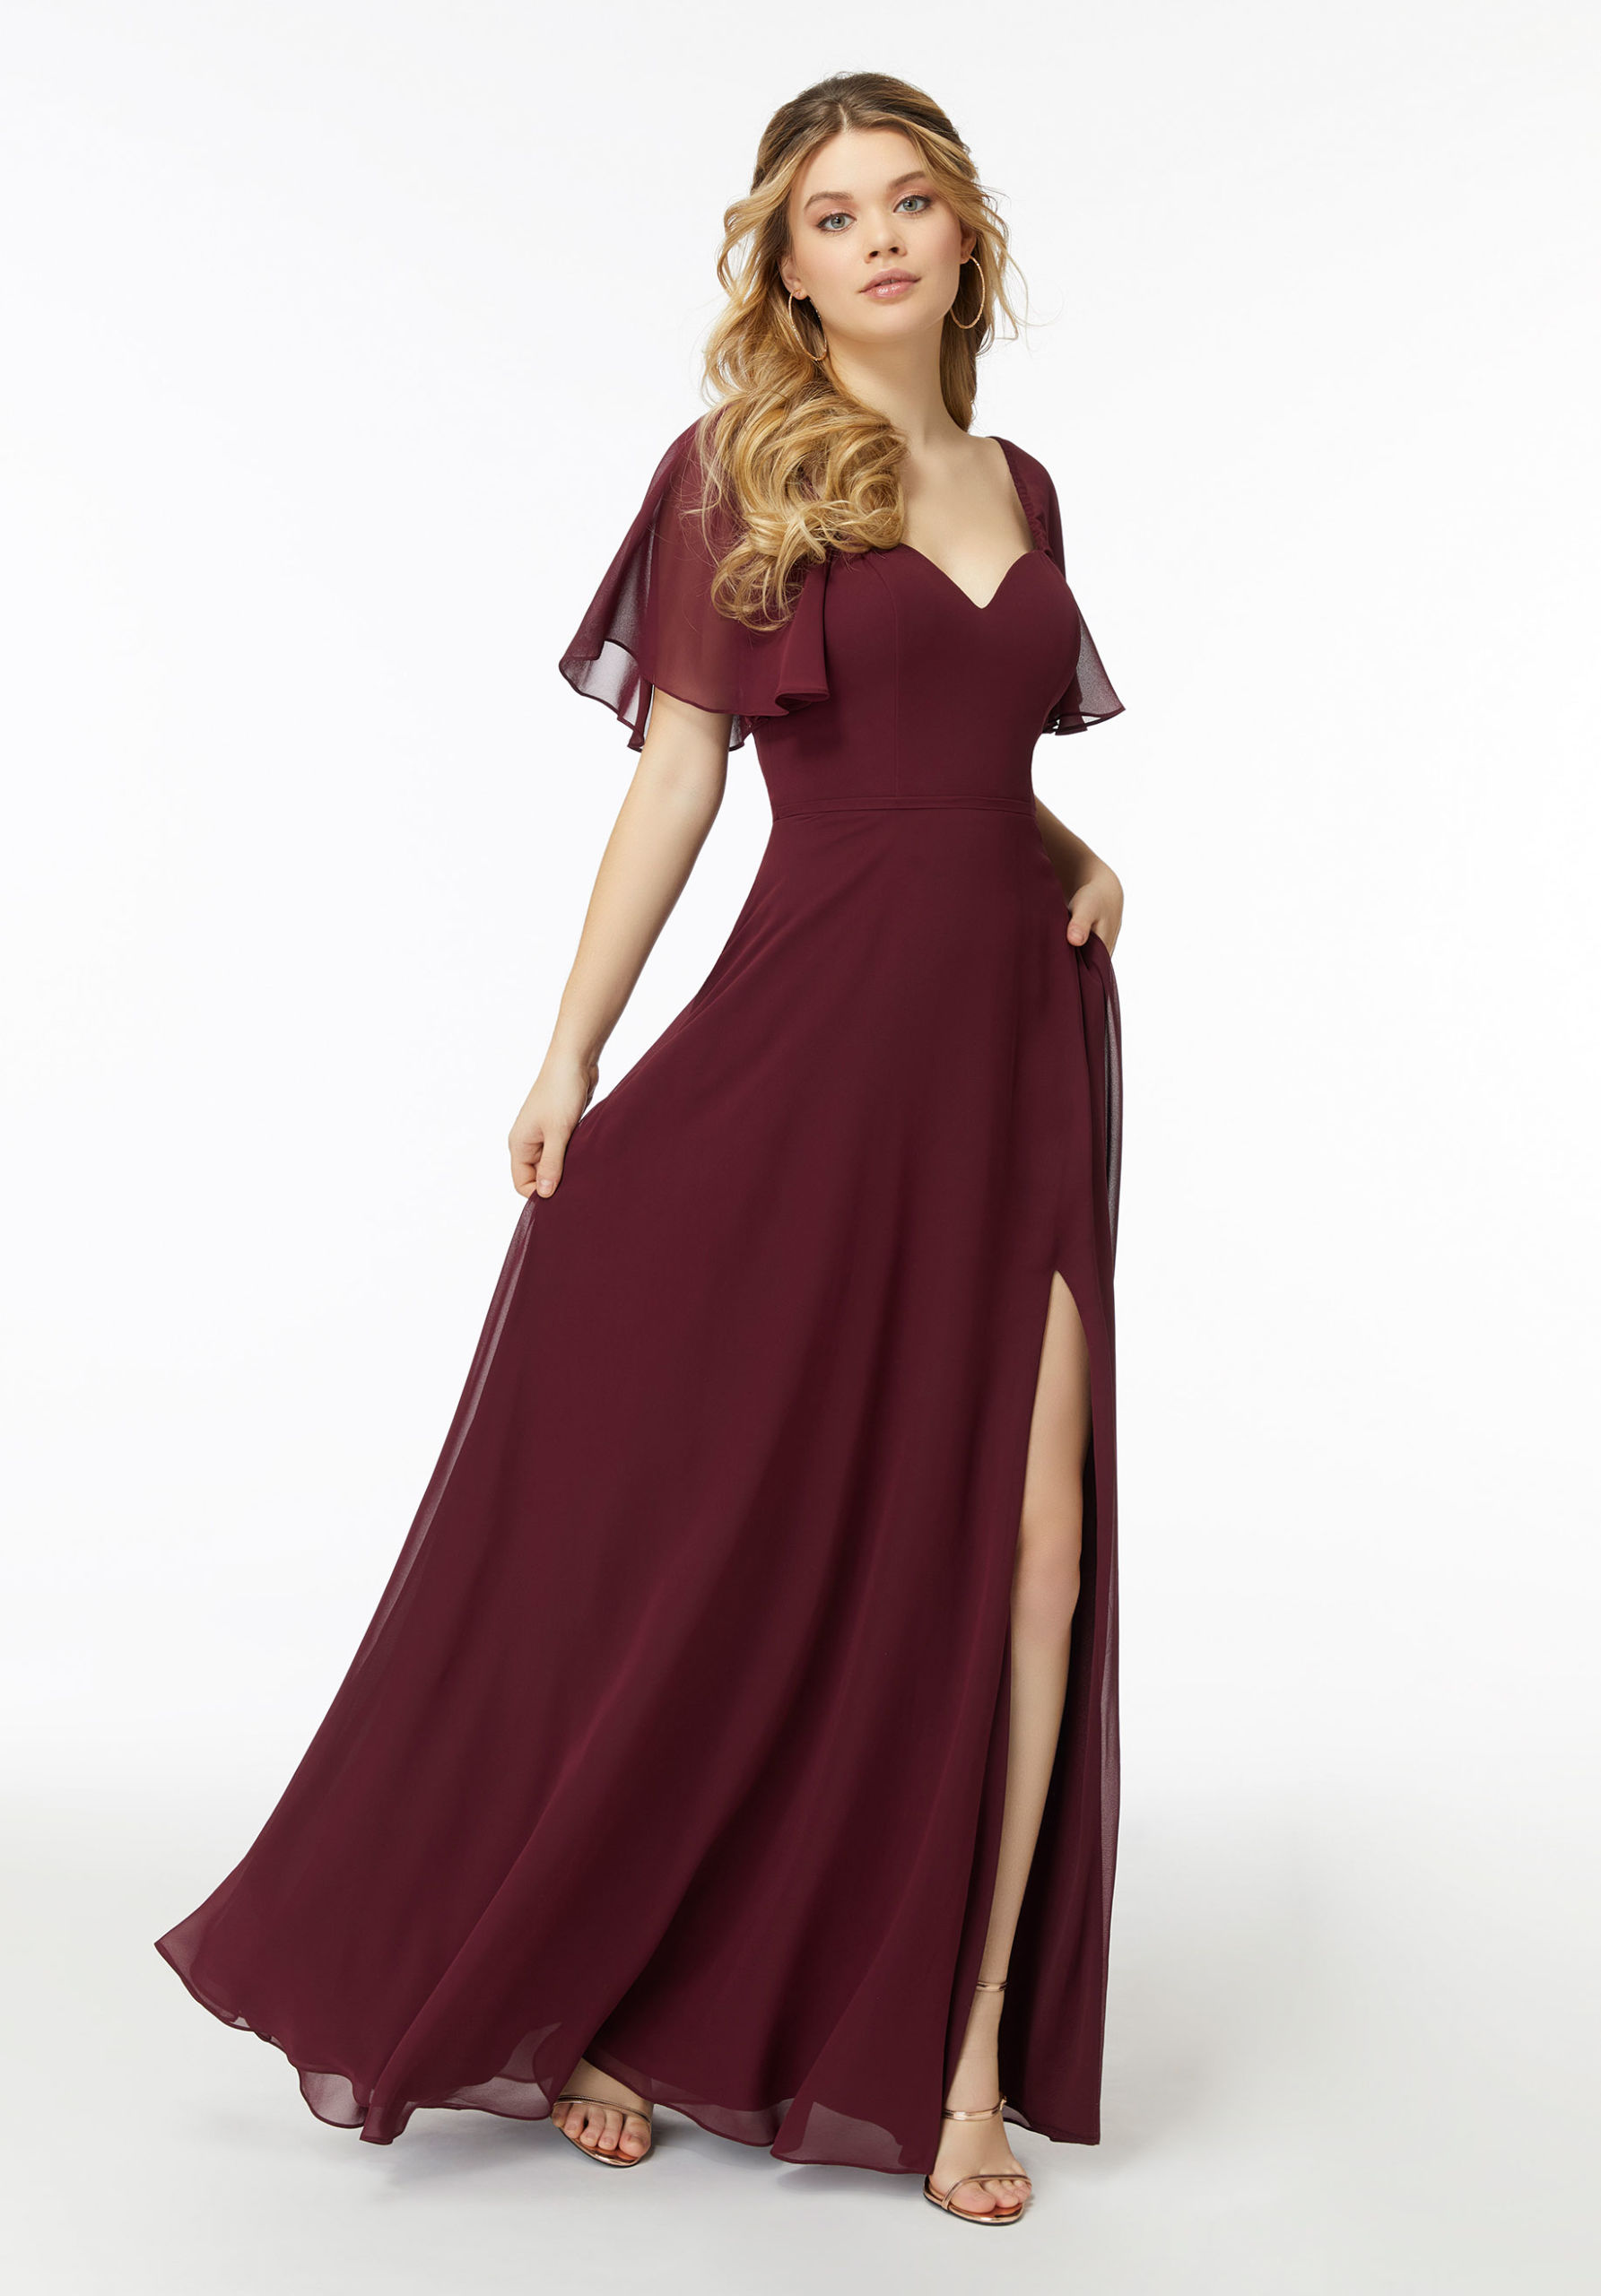 Morilee Chiffon Flutter Sleeve, Sweetheart Bridesmaid Dress Style #21722